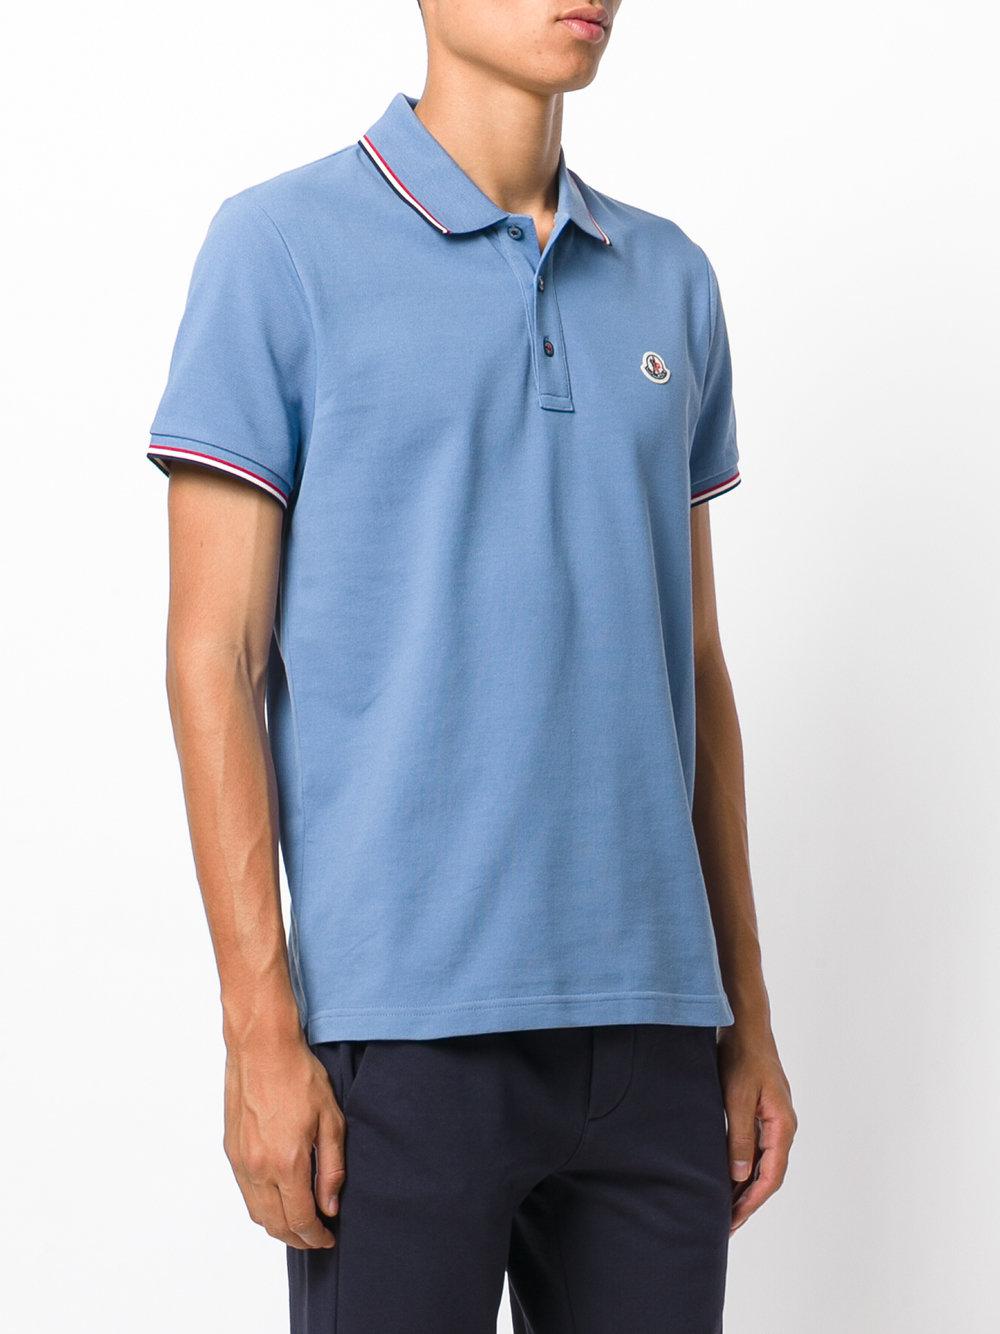 Moncler Cotton Tri-tone Trim Polo Shirt in Blue for Men - Lyst